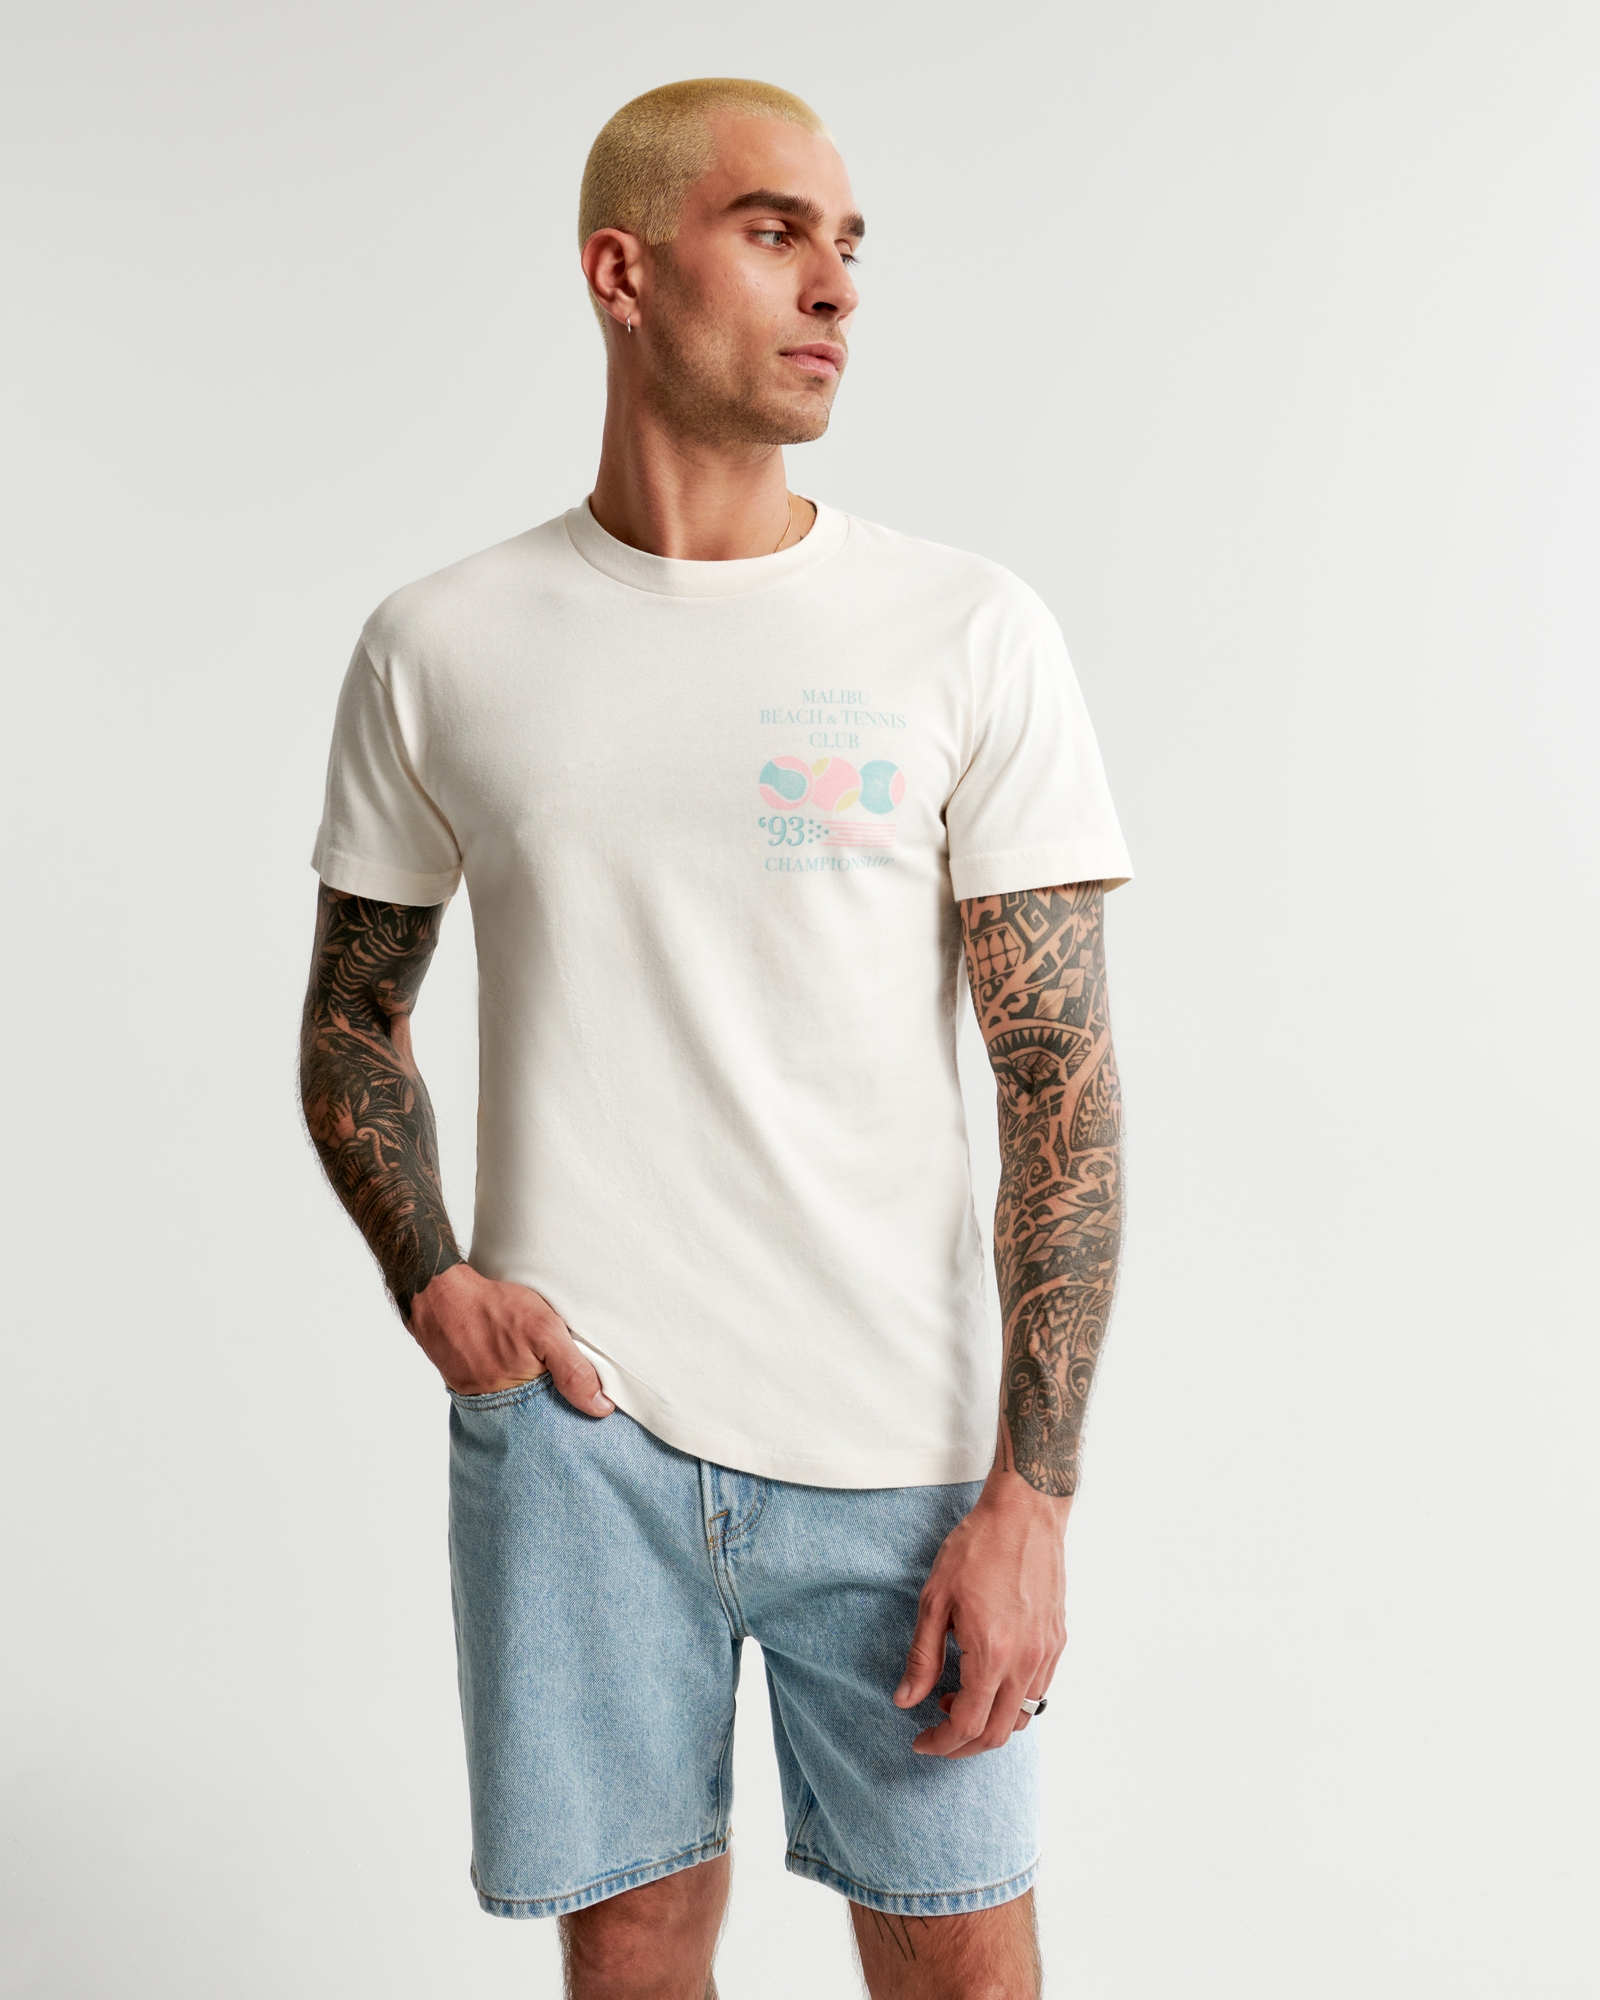 FITZ + EDDI Tennis Club T-Shirt - One Size